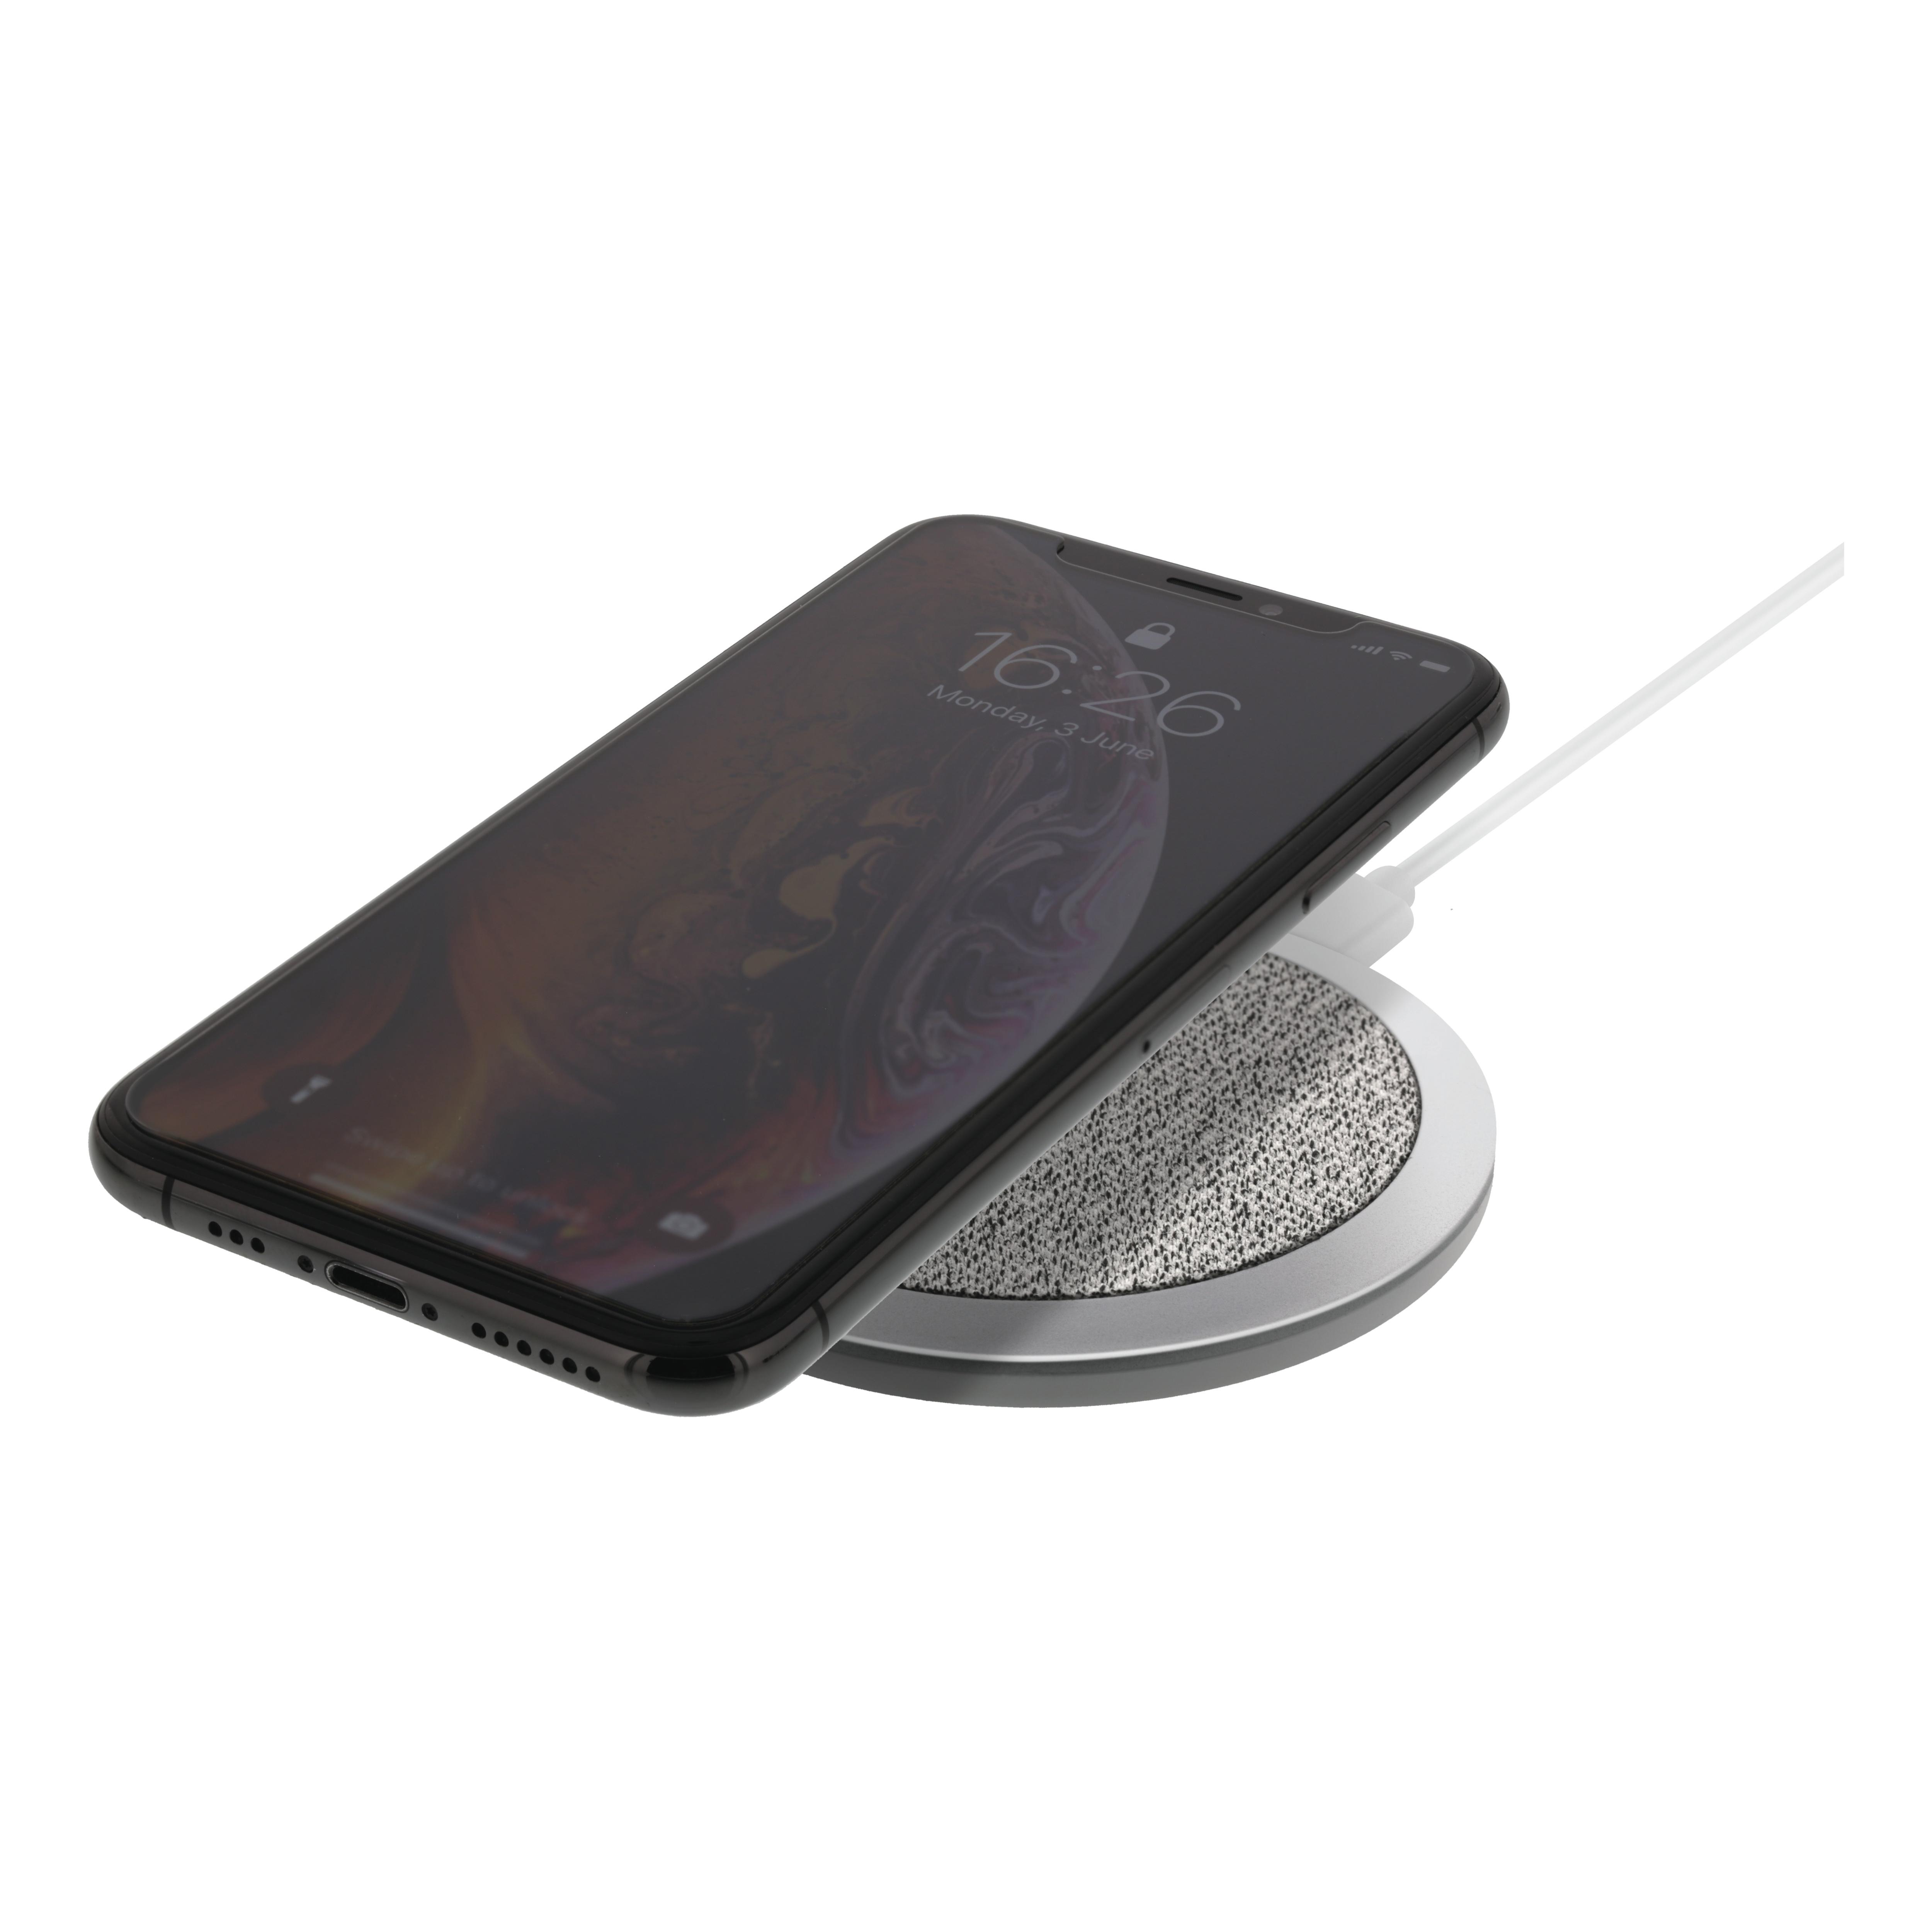 10W Wireless Qi Charging Pad Grey